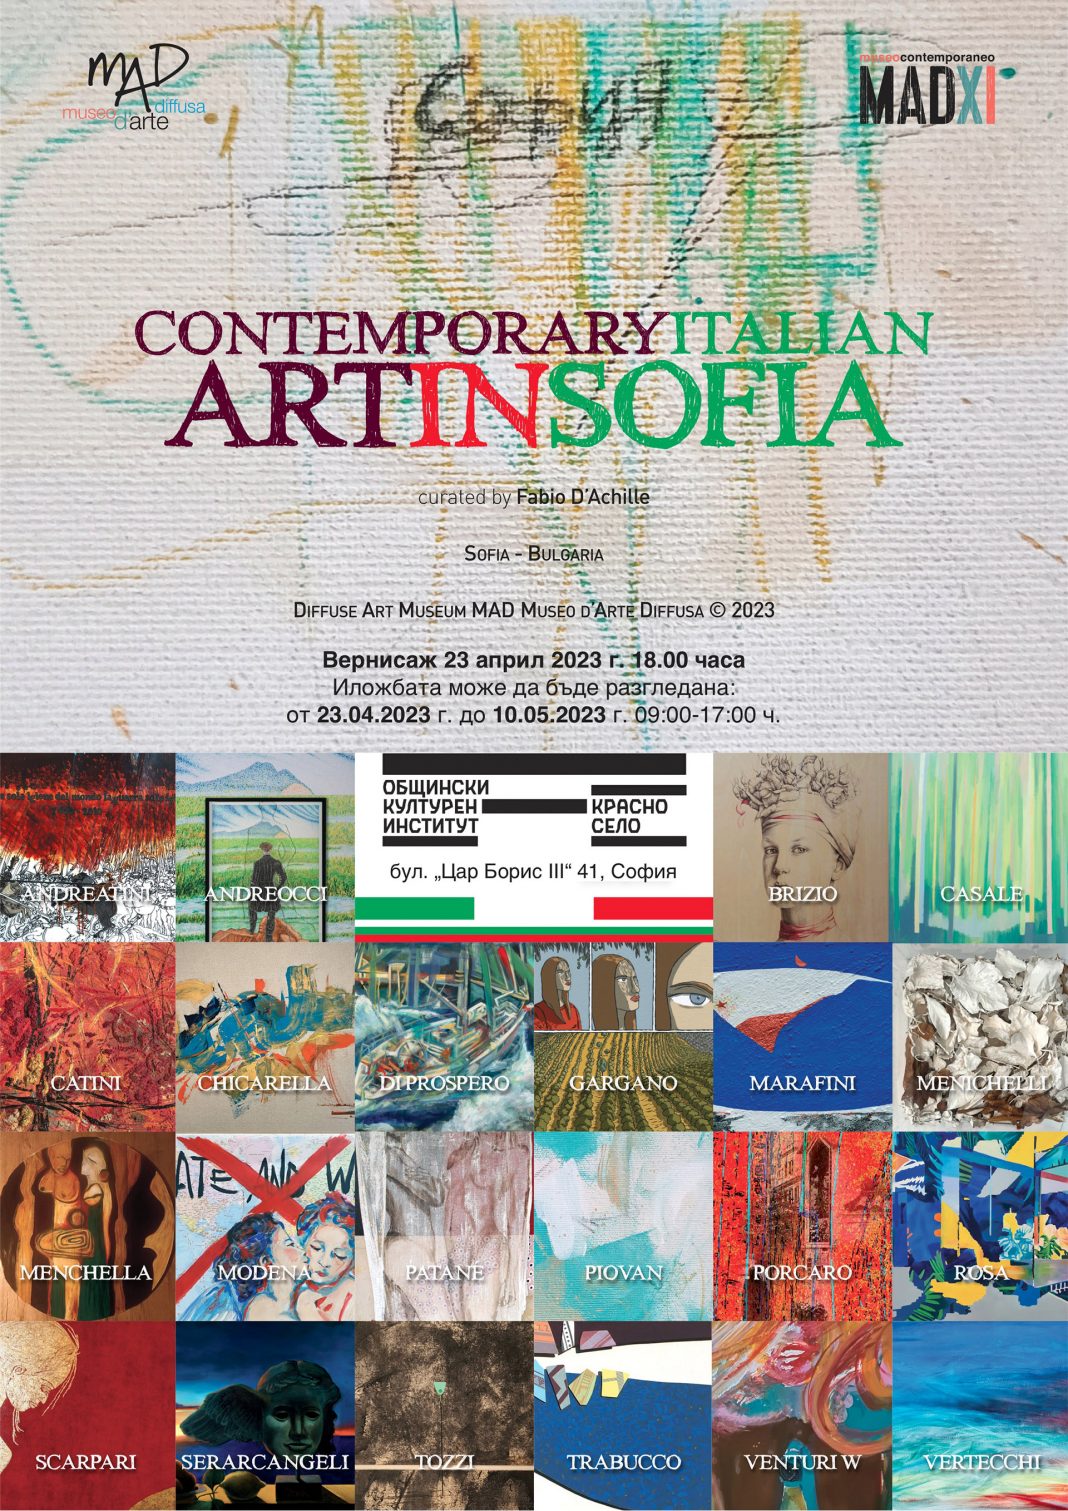 CONTEMPORARY ITALIAN ART IN SOFIAhttps://www.exibart.com/repository/media/formidable/11/img/ce6/locandina-KRASNO-SELO-1-1068x1511.jpg